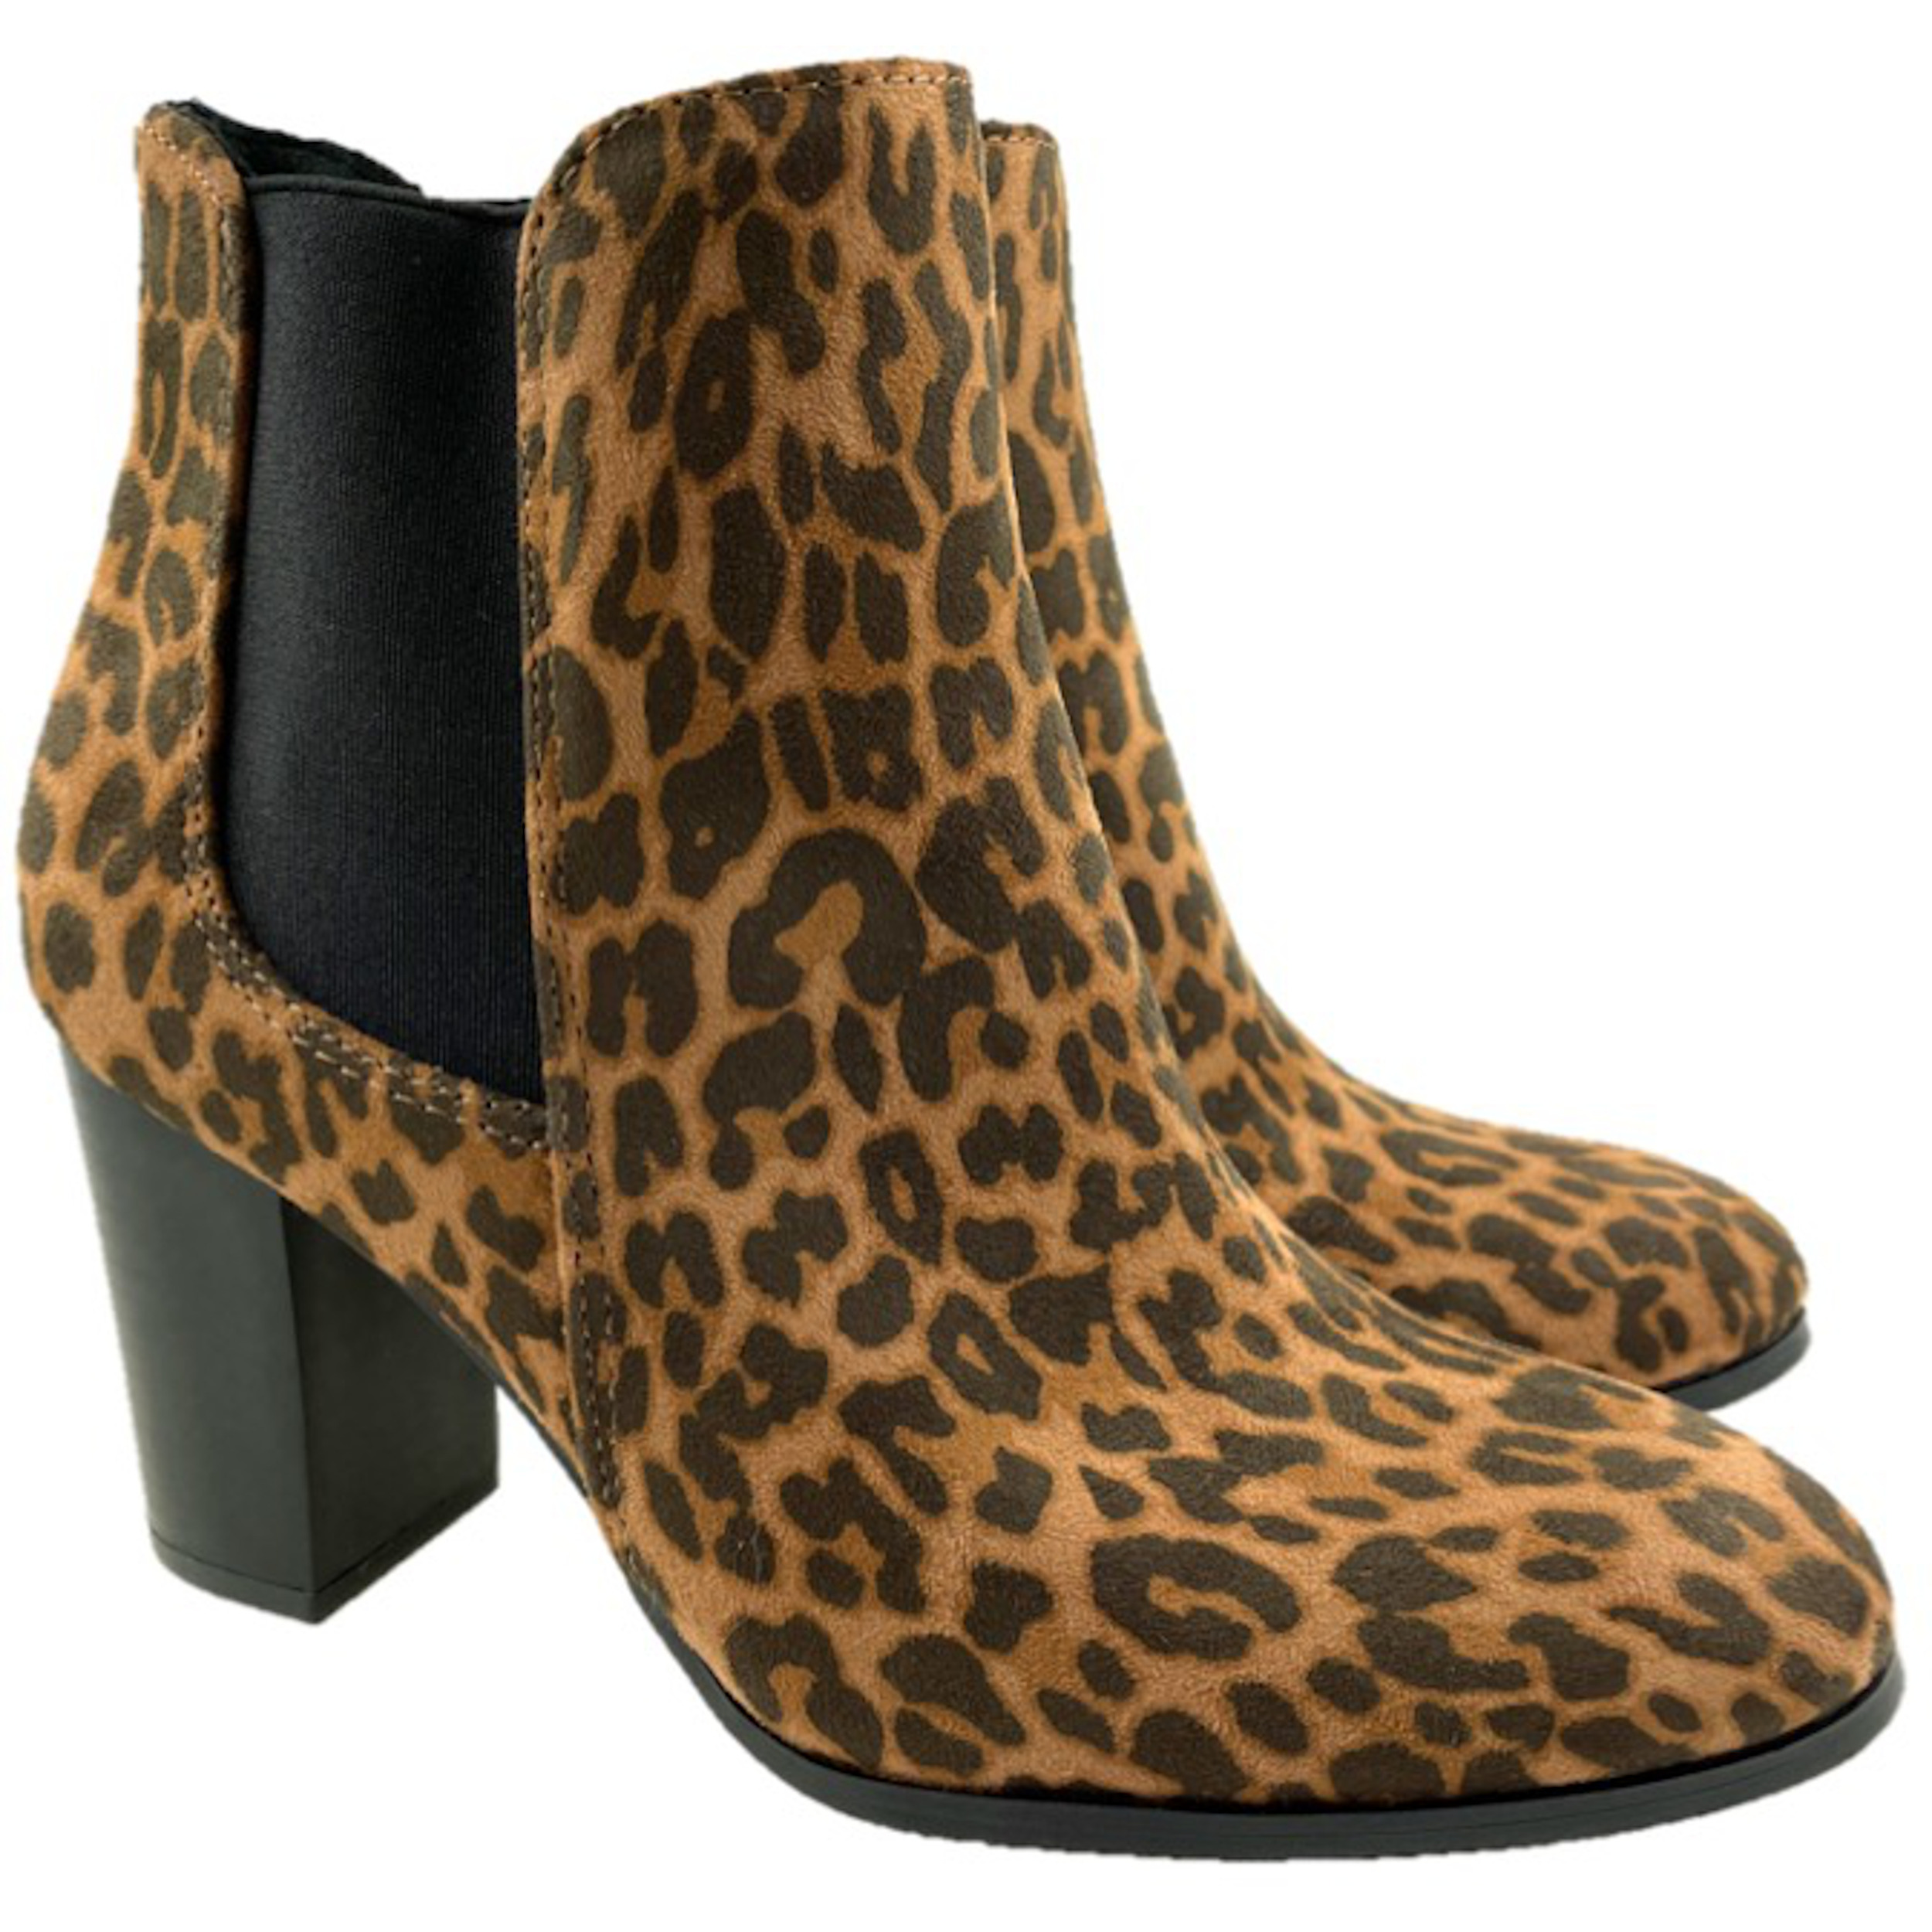 Ladies Leopard Suede Ankle Boot Size Uk 4-9 mcfootwearltd